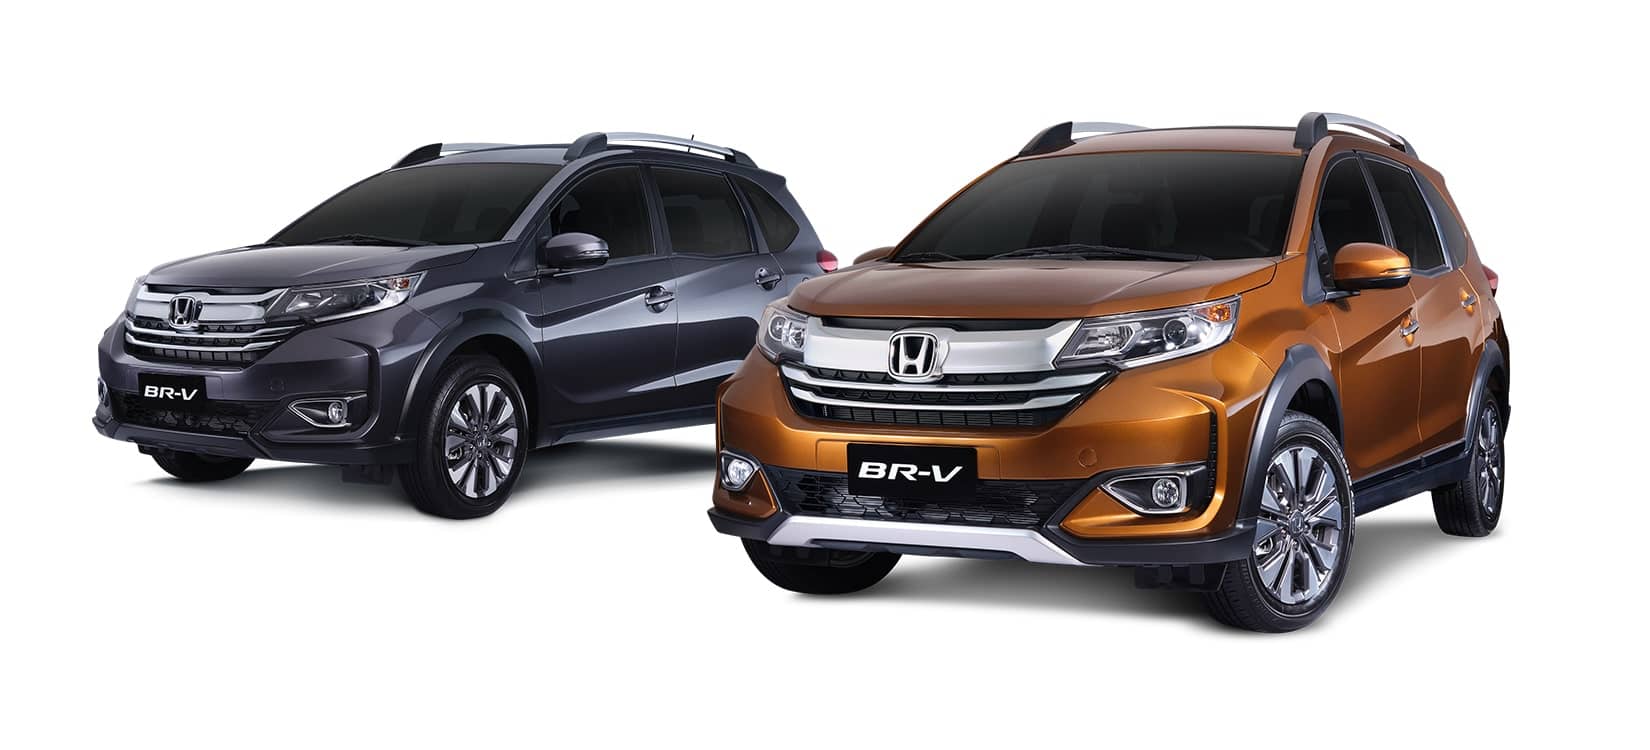 Honda Cars Philippines › All-New Honda BR-V now on Philippine shores; Honda  surprises with All-New BR-V Modulo variants